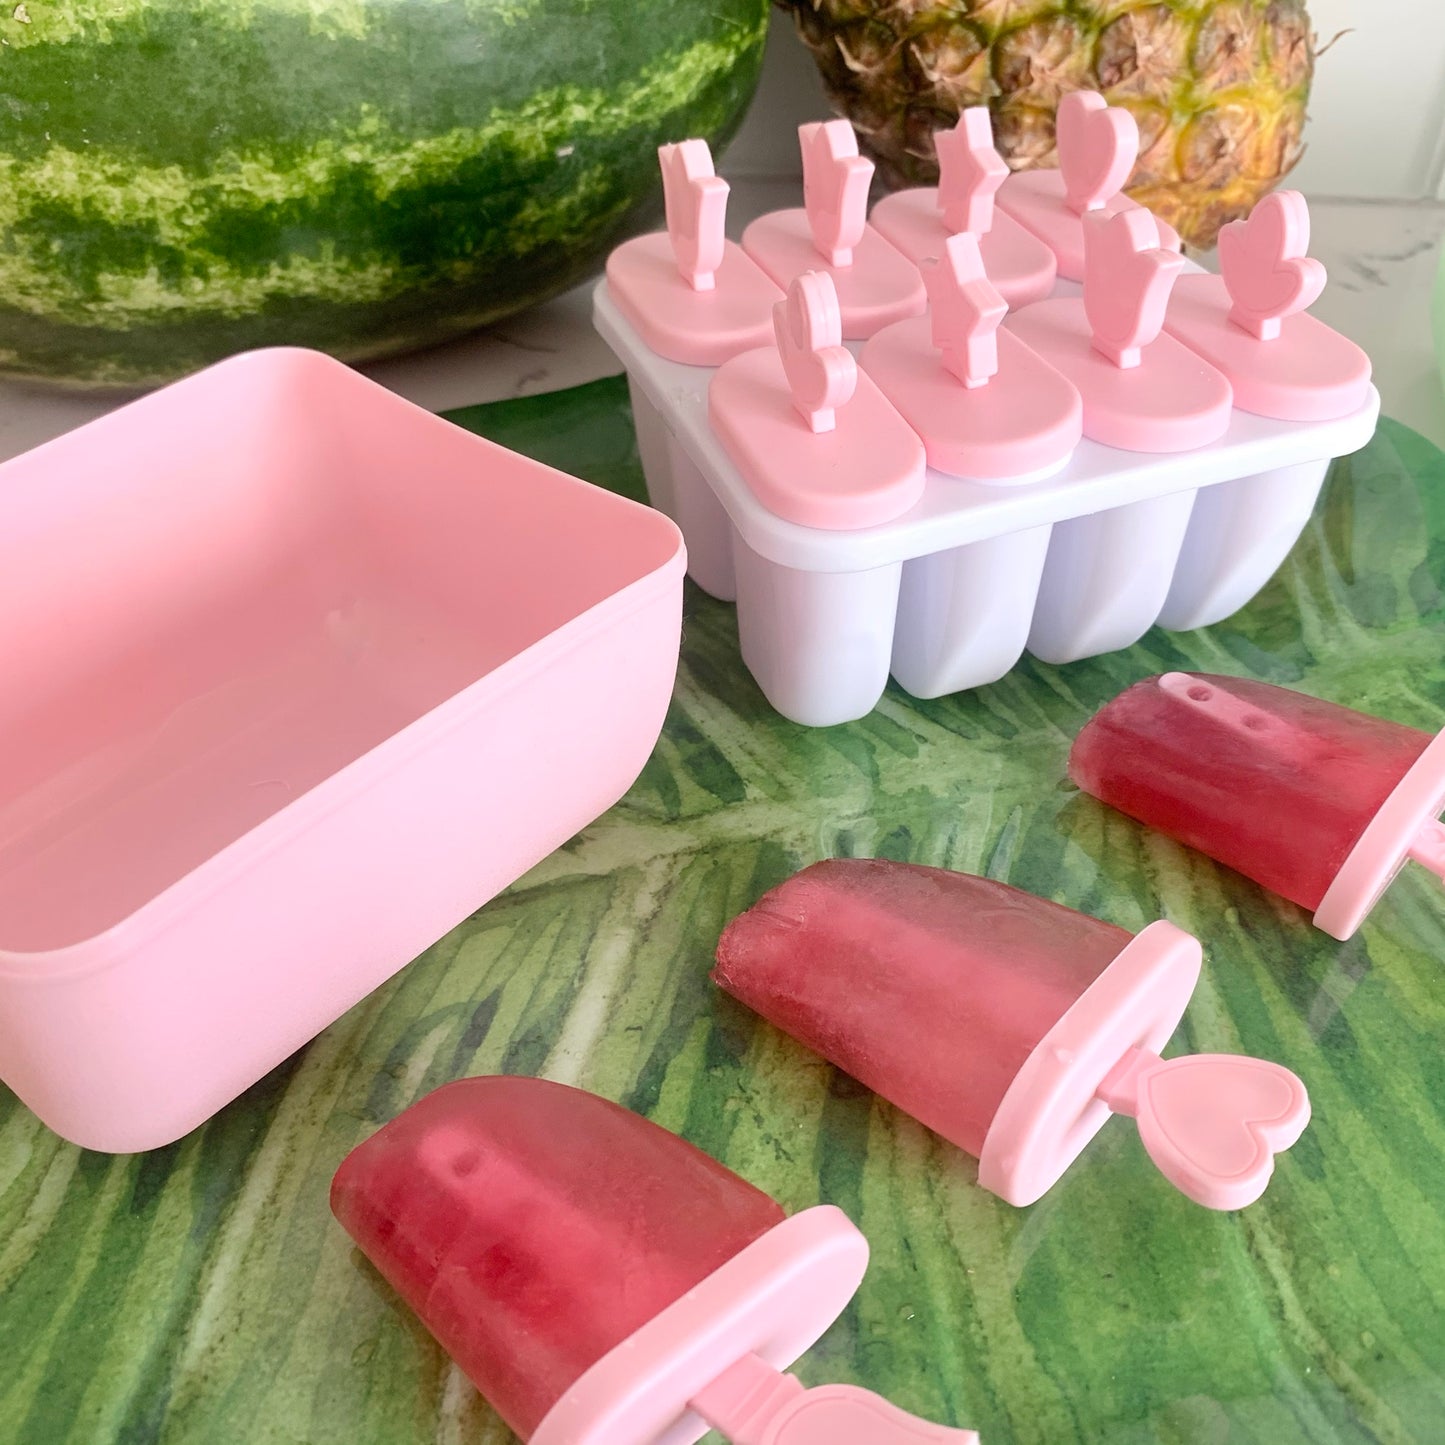 DIY Self-Made Ice Cream Popsicle Mold